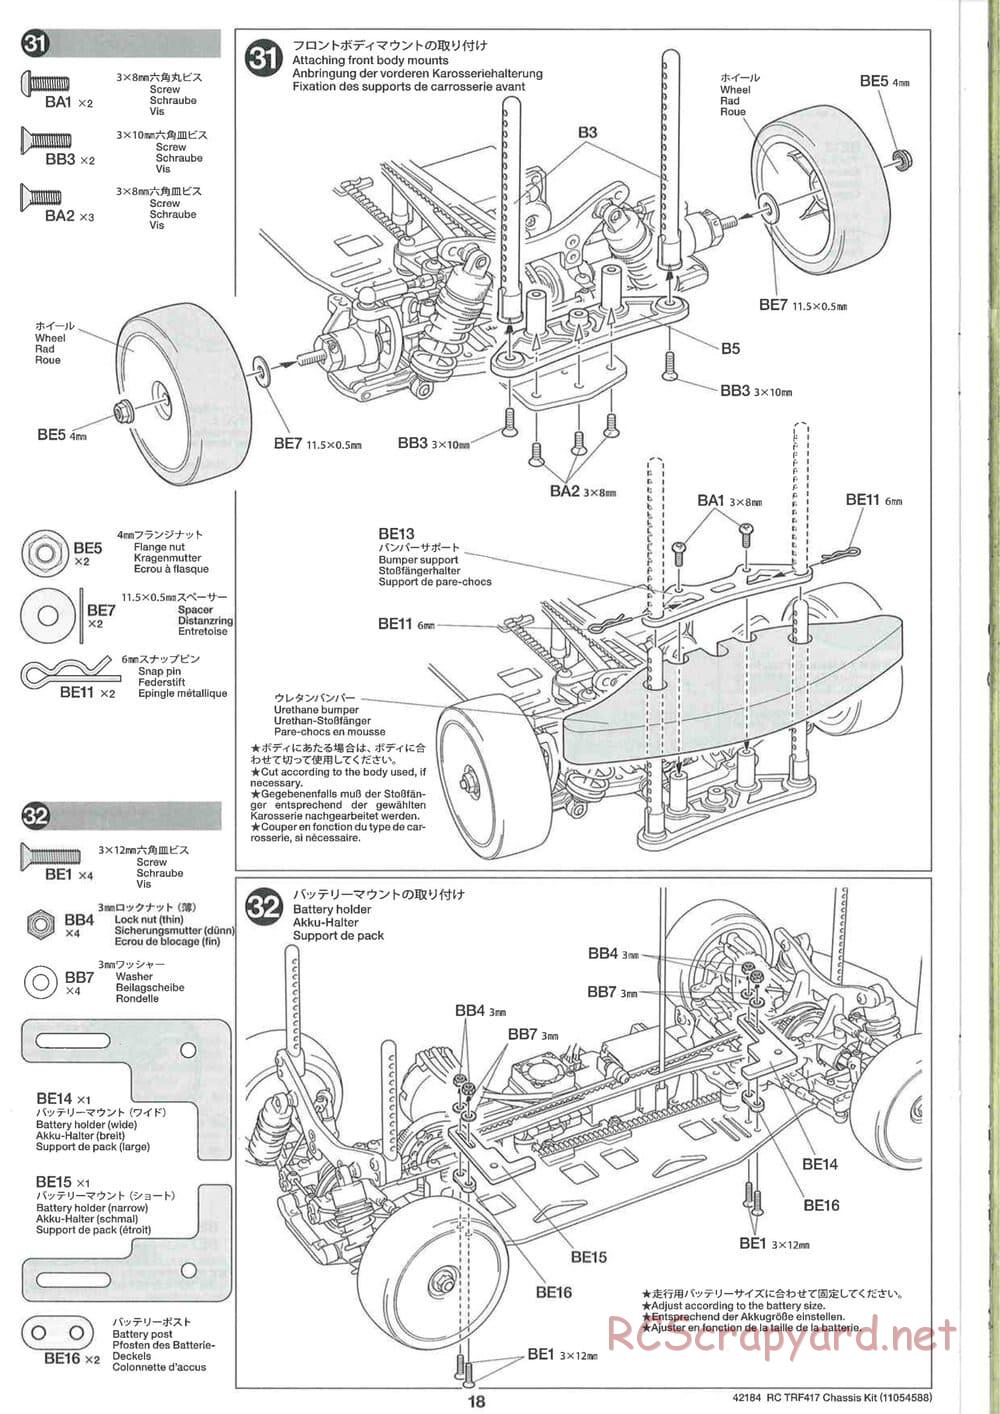 Tamiya - TRF417 Chassis - Manual - Page 18